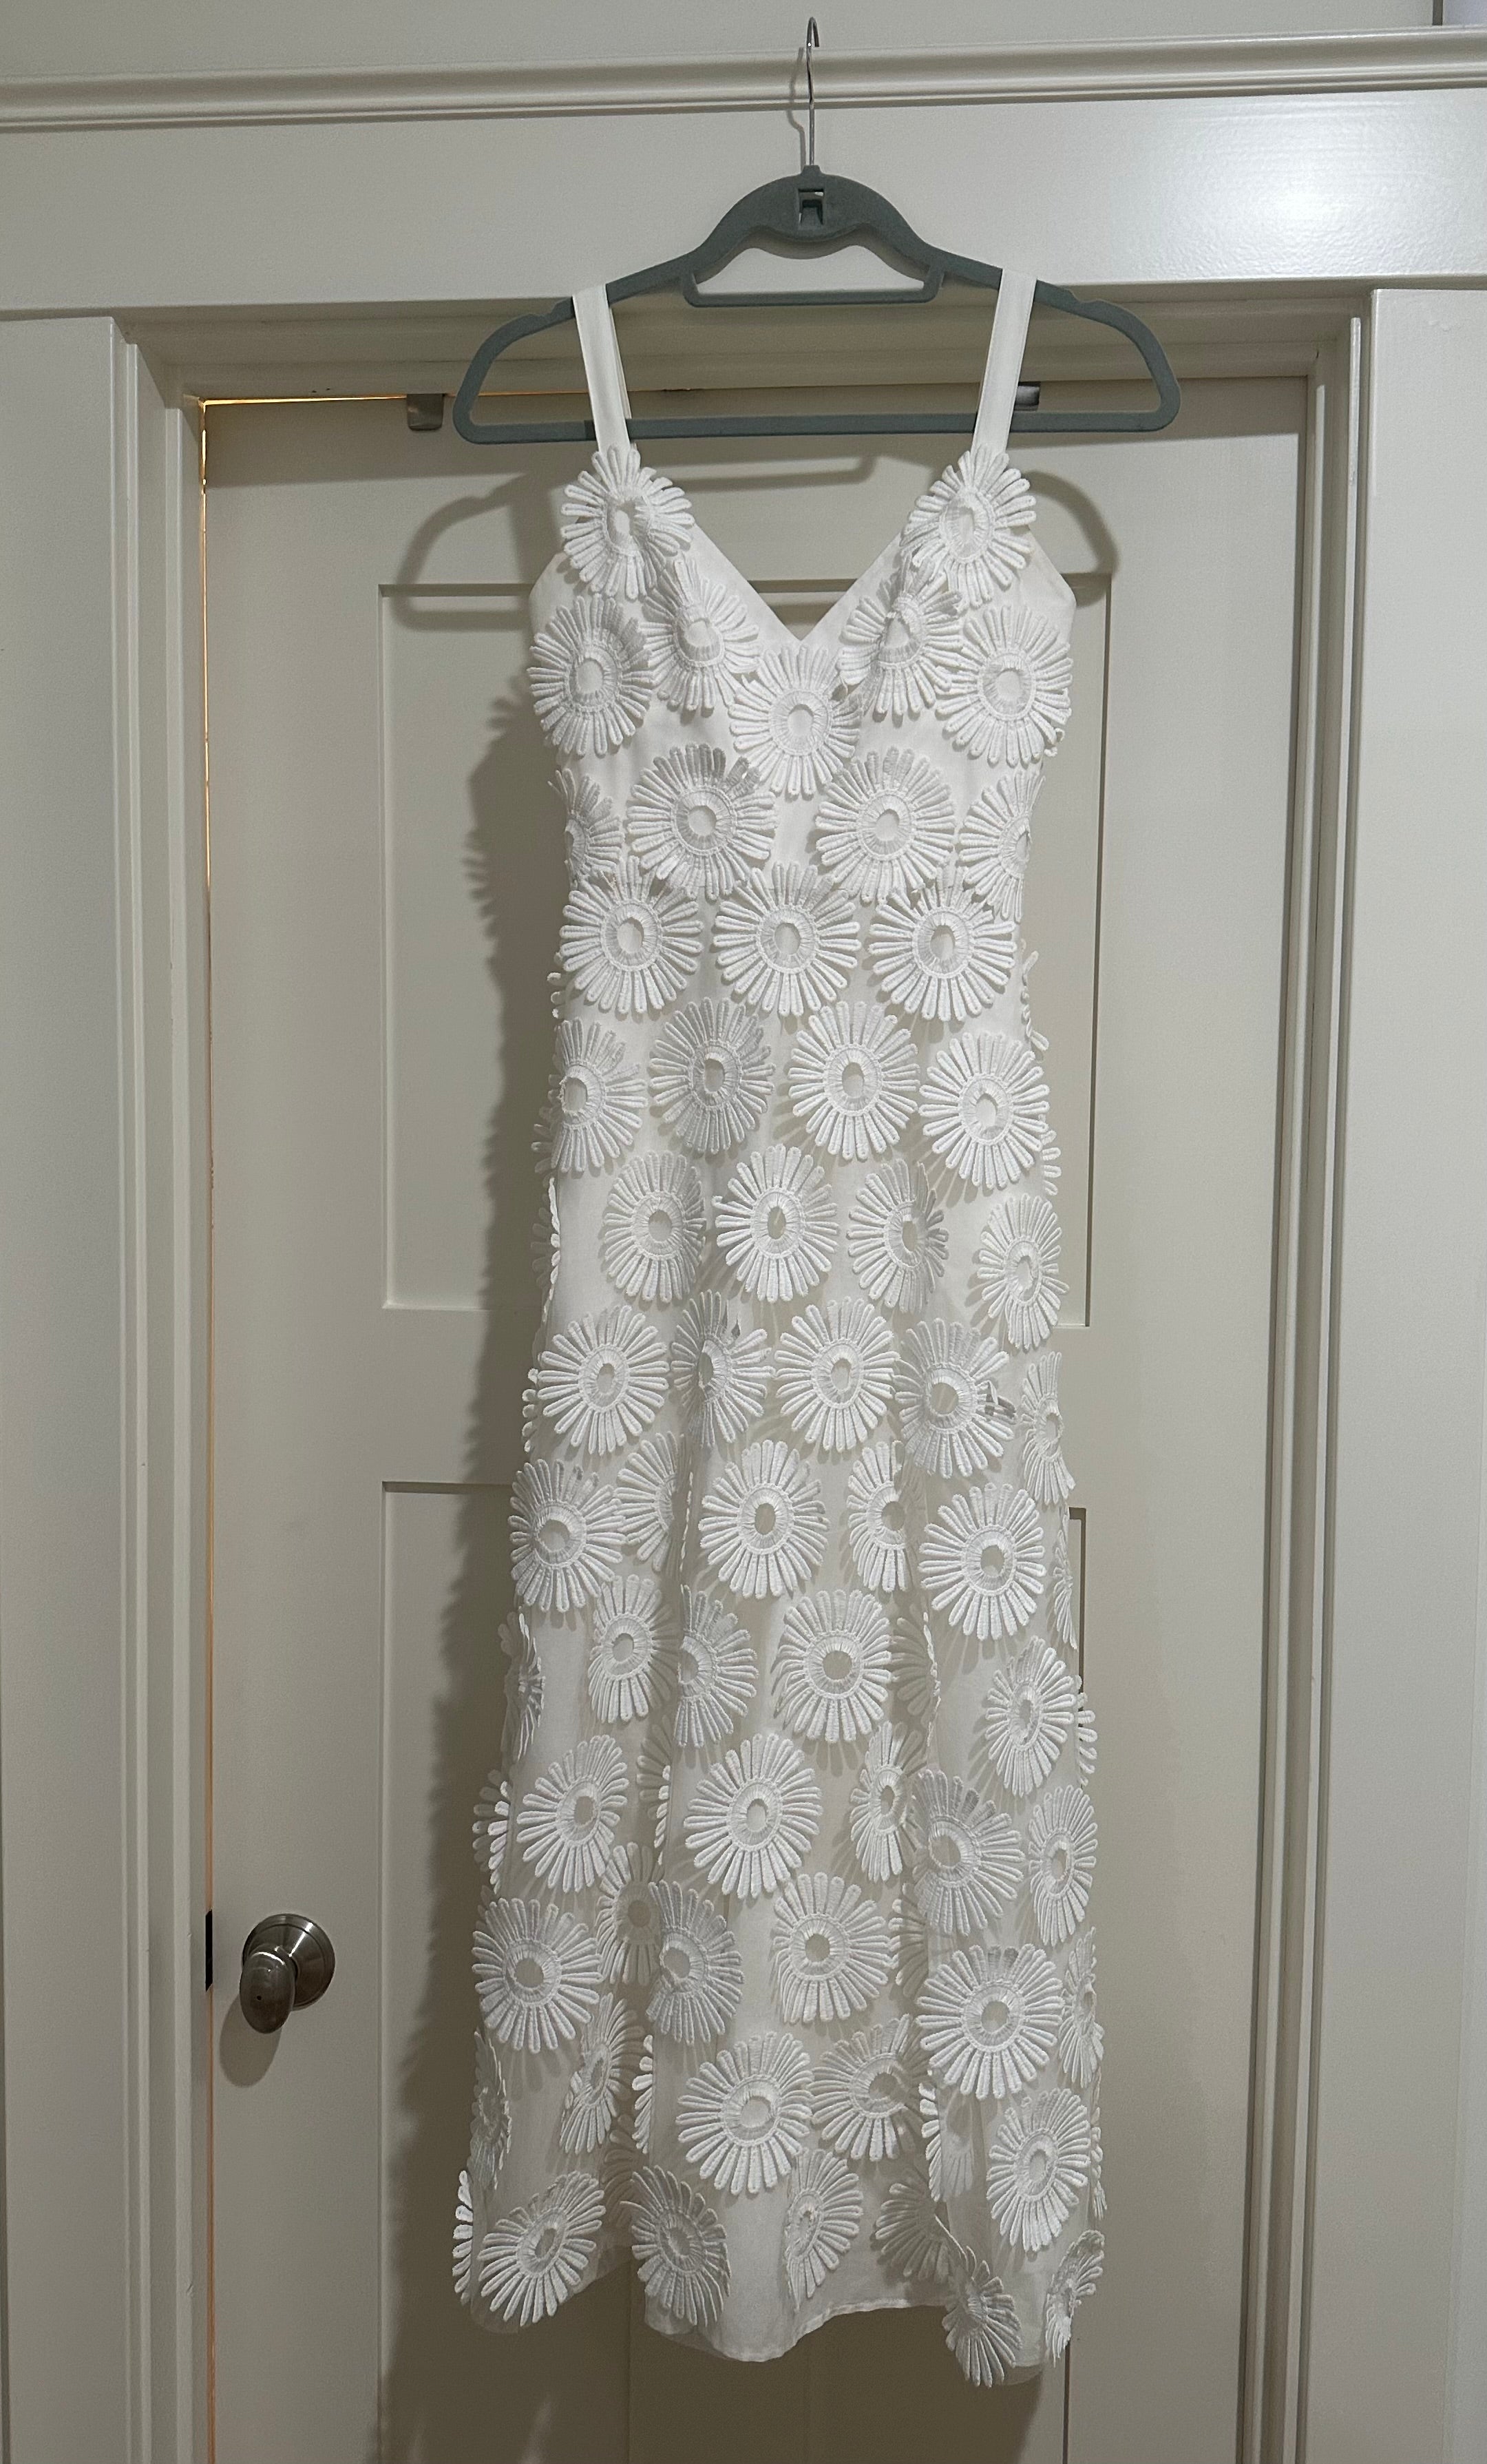 Elie Saab floral lace minidress - White